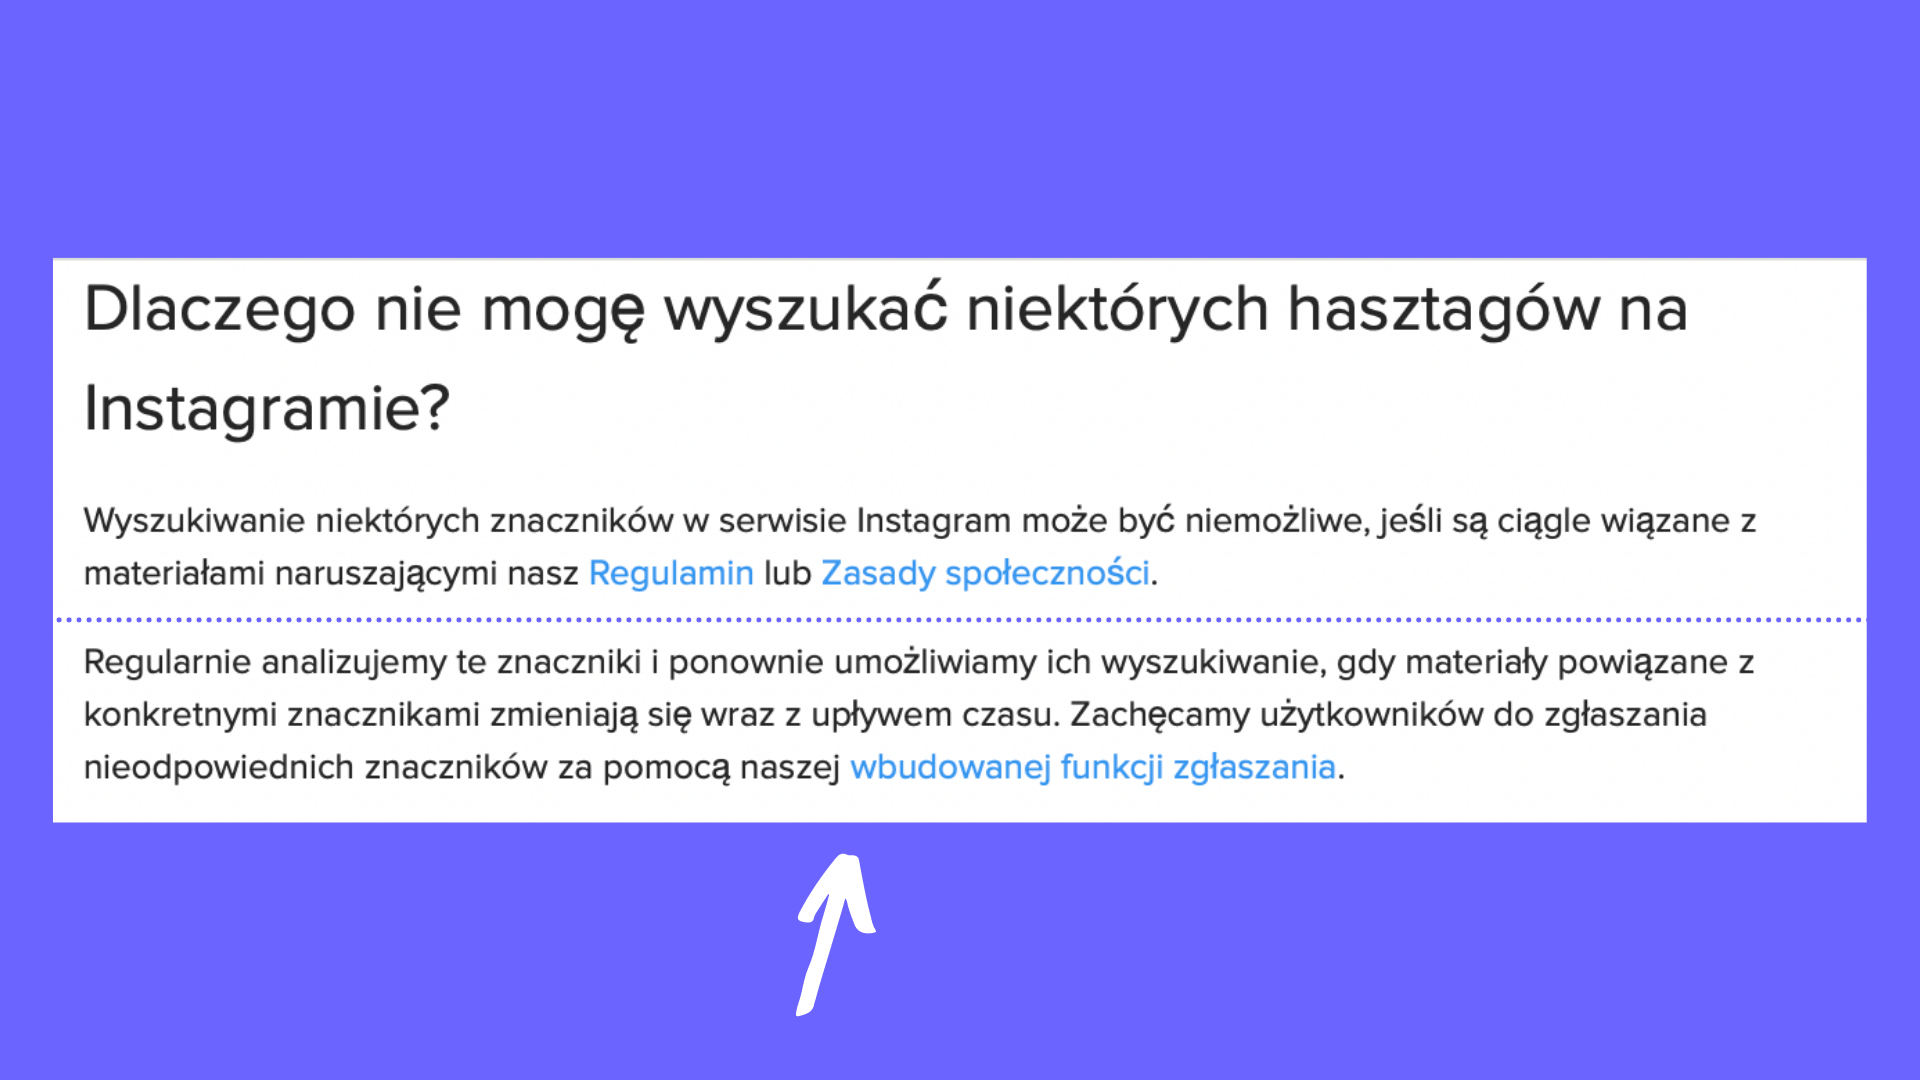 zbanowane hashtagi ukryte hashtagi na instagramie